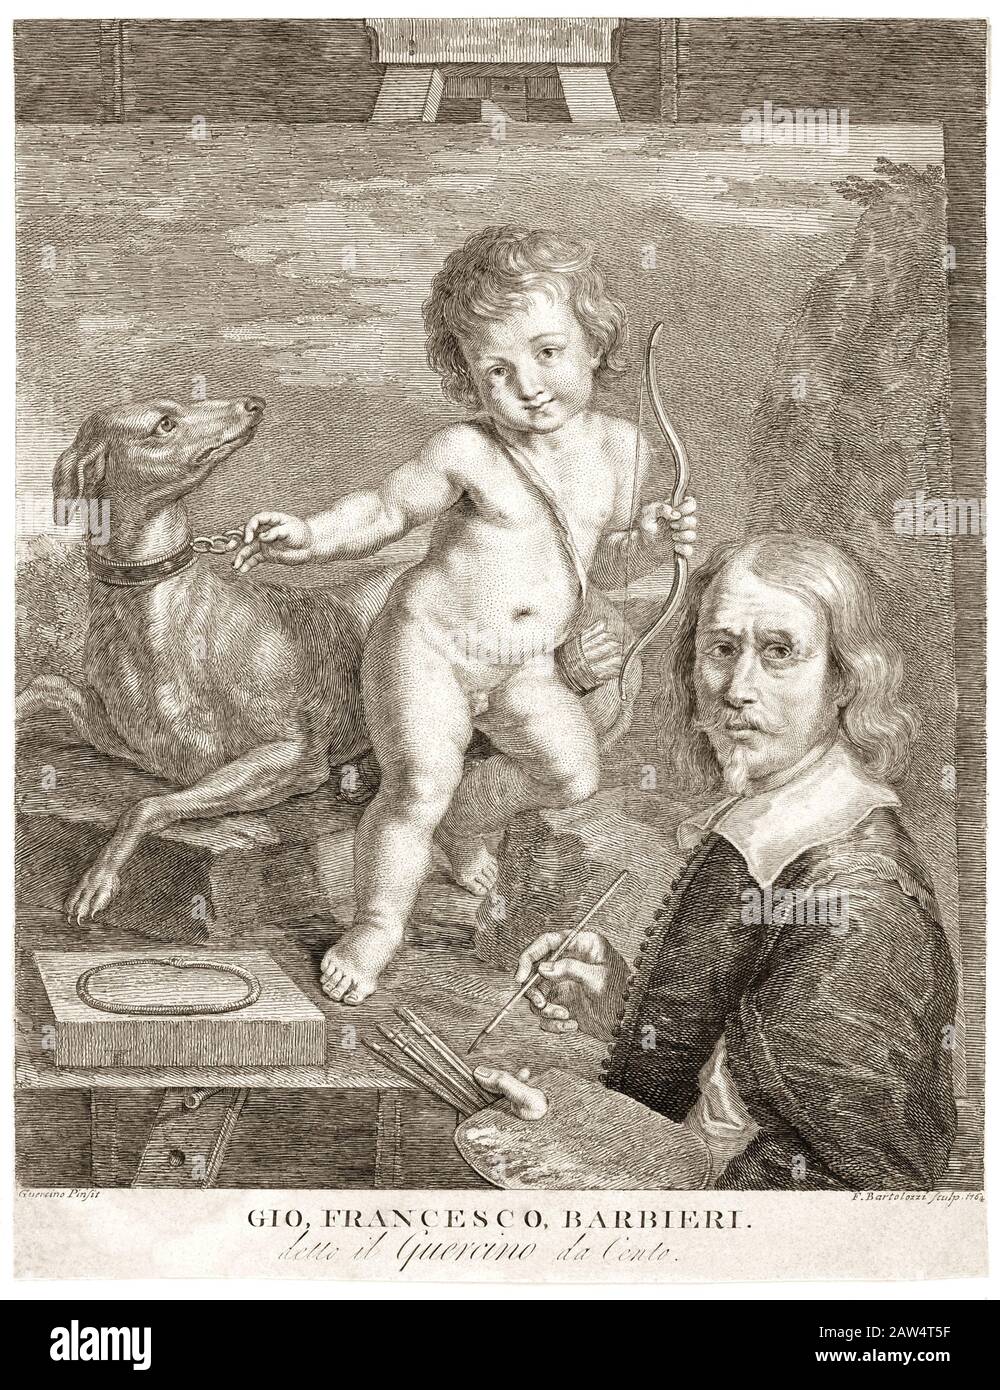 1.650 CA, ITALIEN: Der italienische Maler des Barock GIOVANNI FRANCESCO BARBIERI alias IL GUERCINO (* 1591; † 1666). Graviertes Porträt von FRANCCCESCO BARTOLOZZ Stockfoto